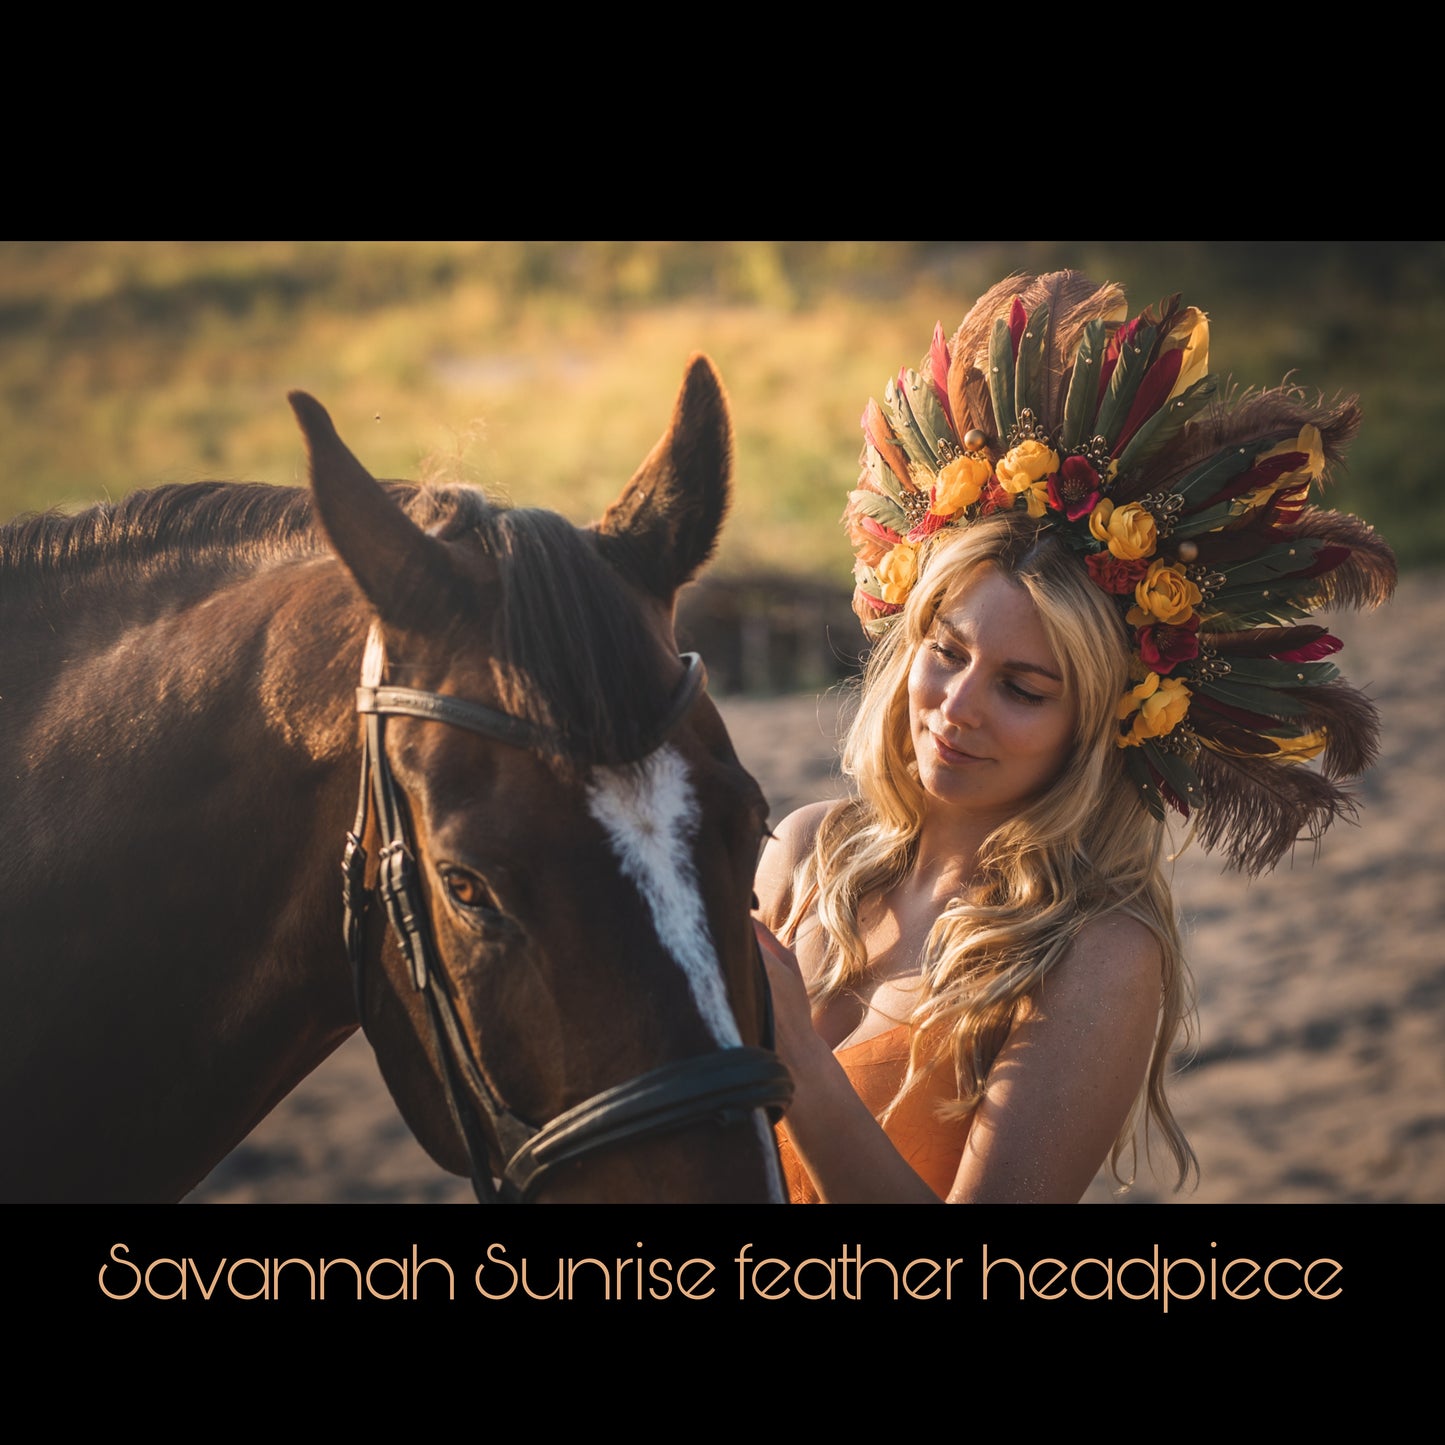 The Savannah Sunrise feather headdress